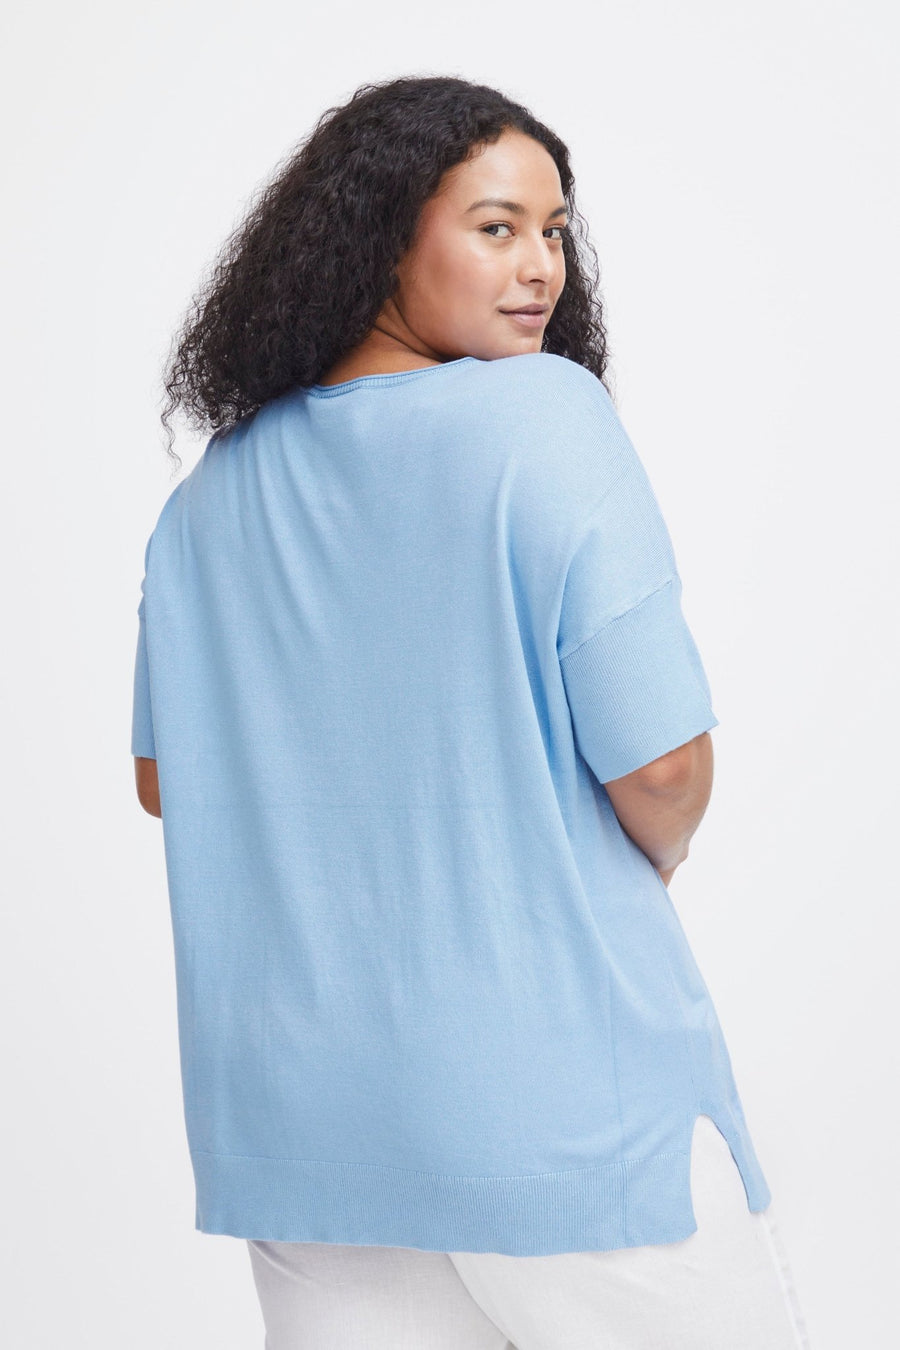 Clia Sweater by simple Wish - hydrangea - Blue Sky Fashions & Lingerie